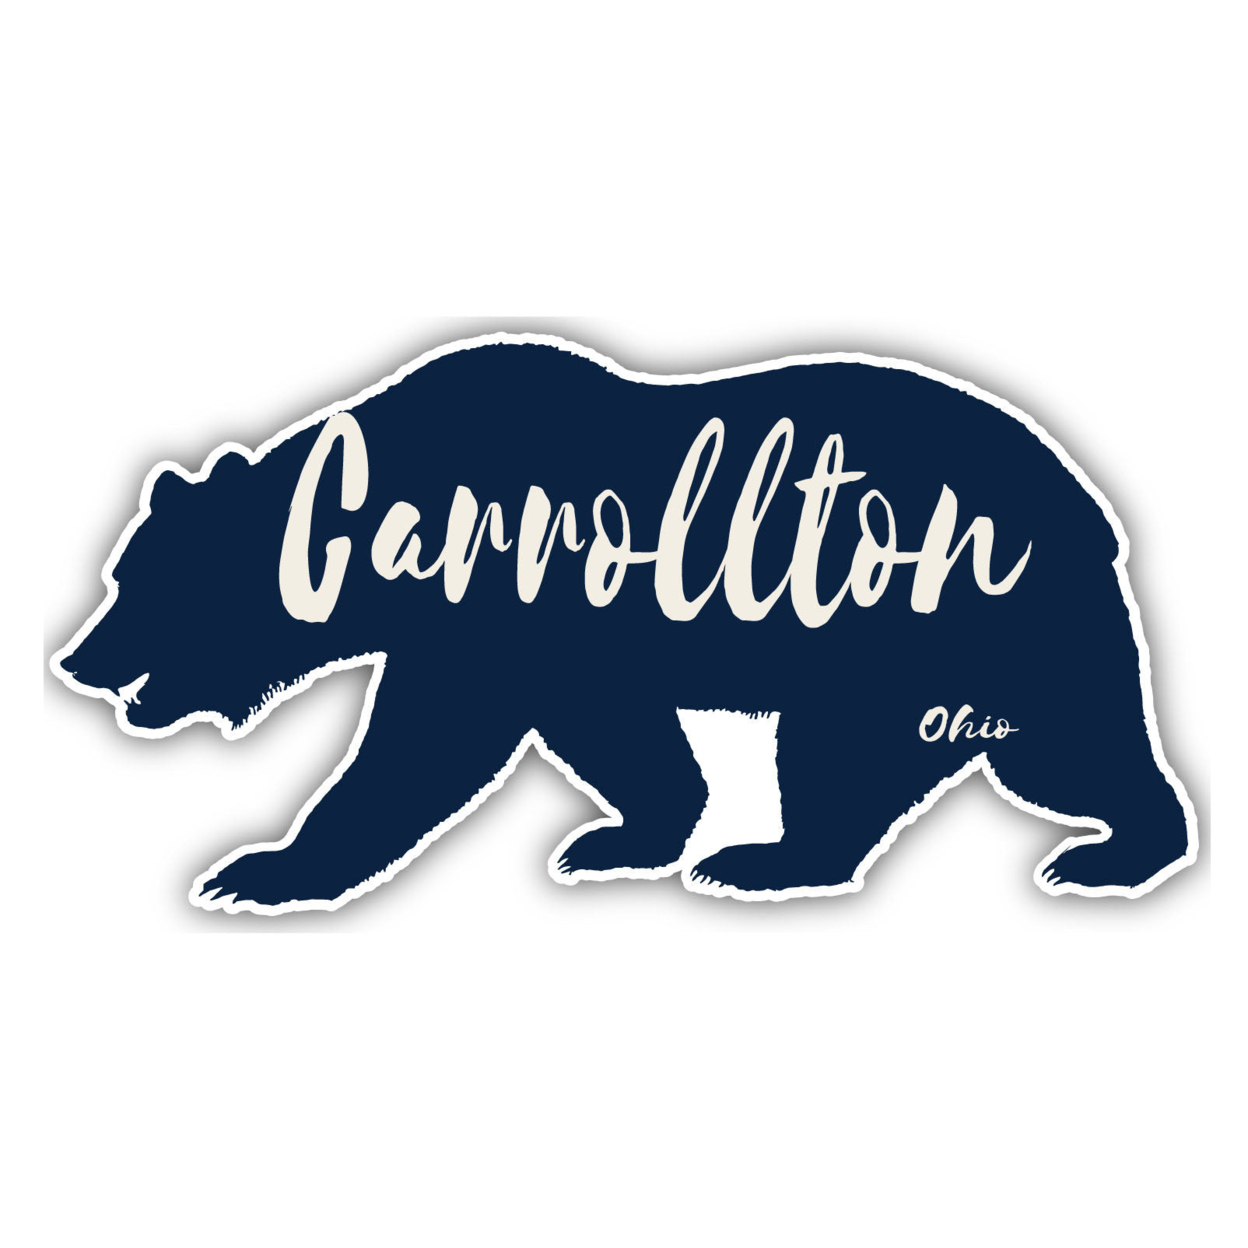 Carrollton Ohio Souvenir Decorative Stickers (Choose Theme And Size) - 4-Pack, 8-Inch, Bear